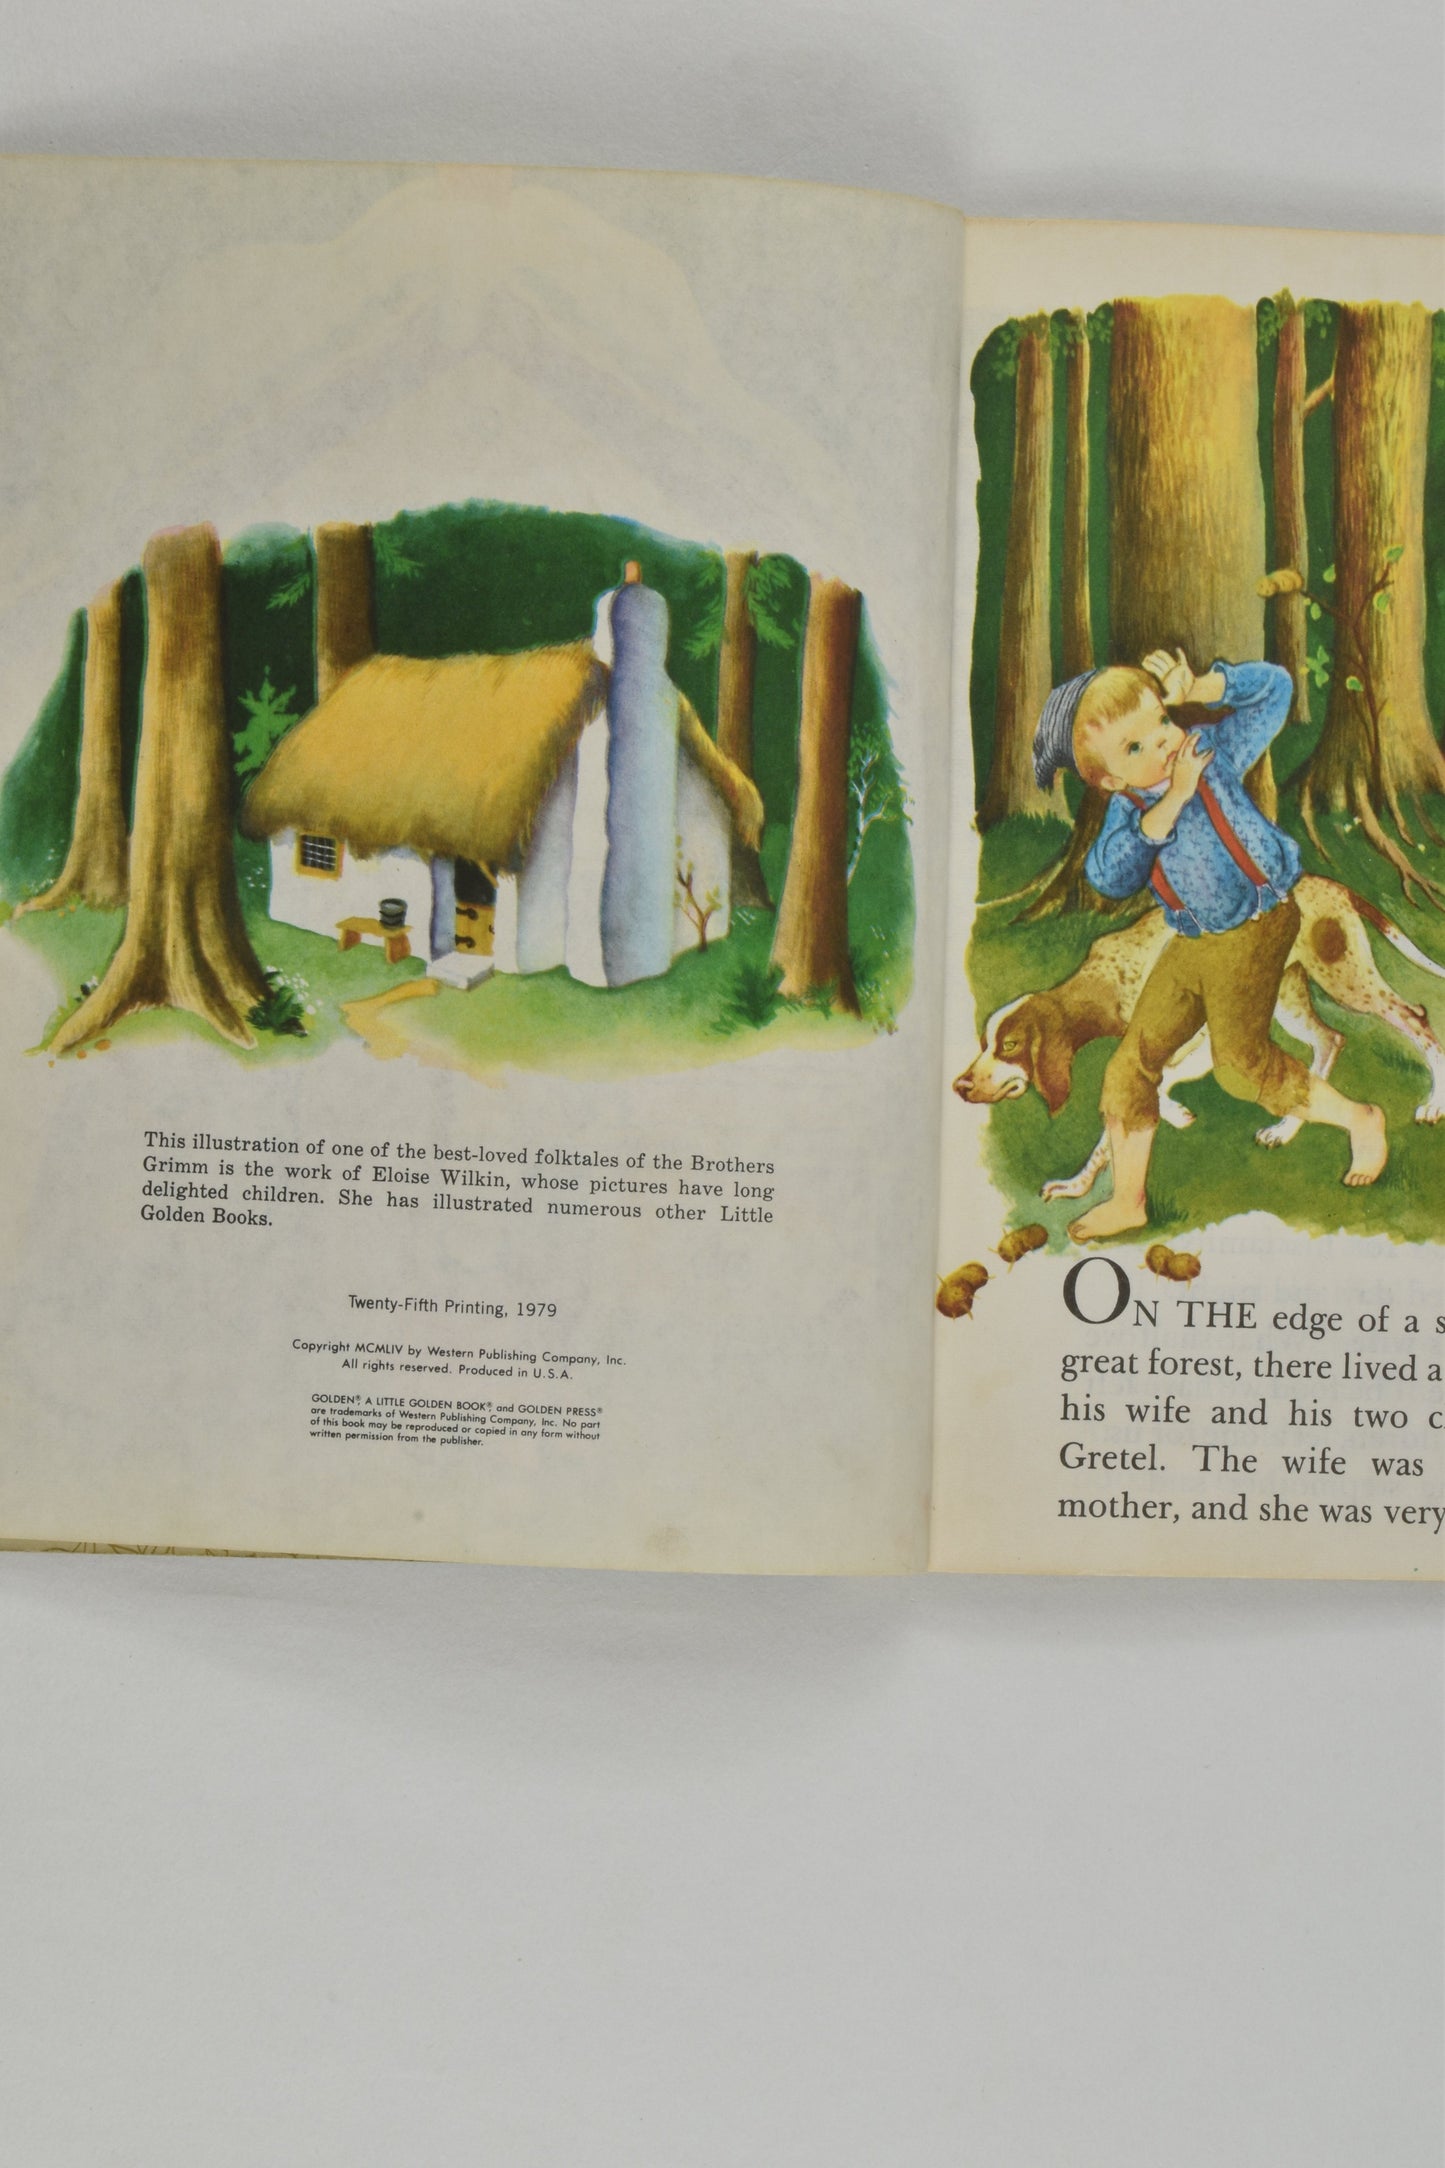 Little Golden Book 'Hansel and Gretel'